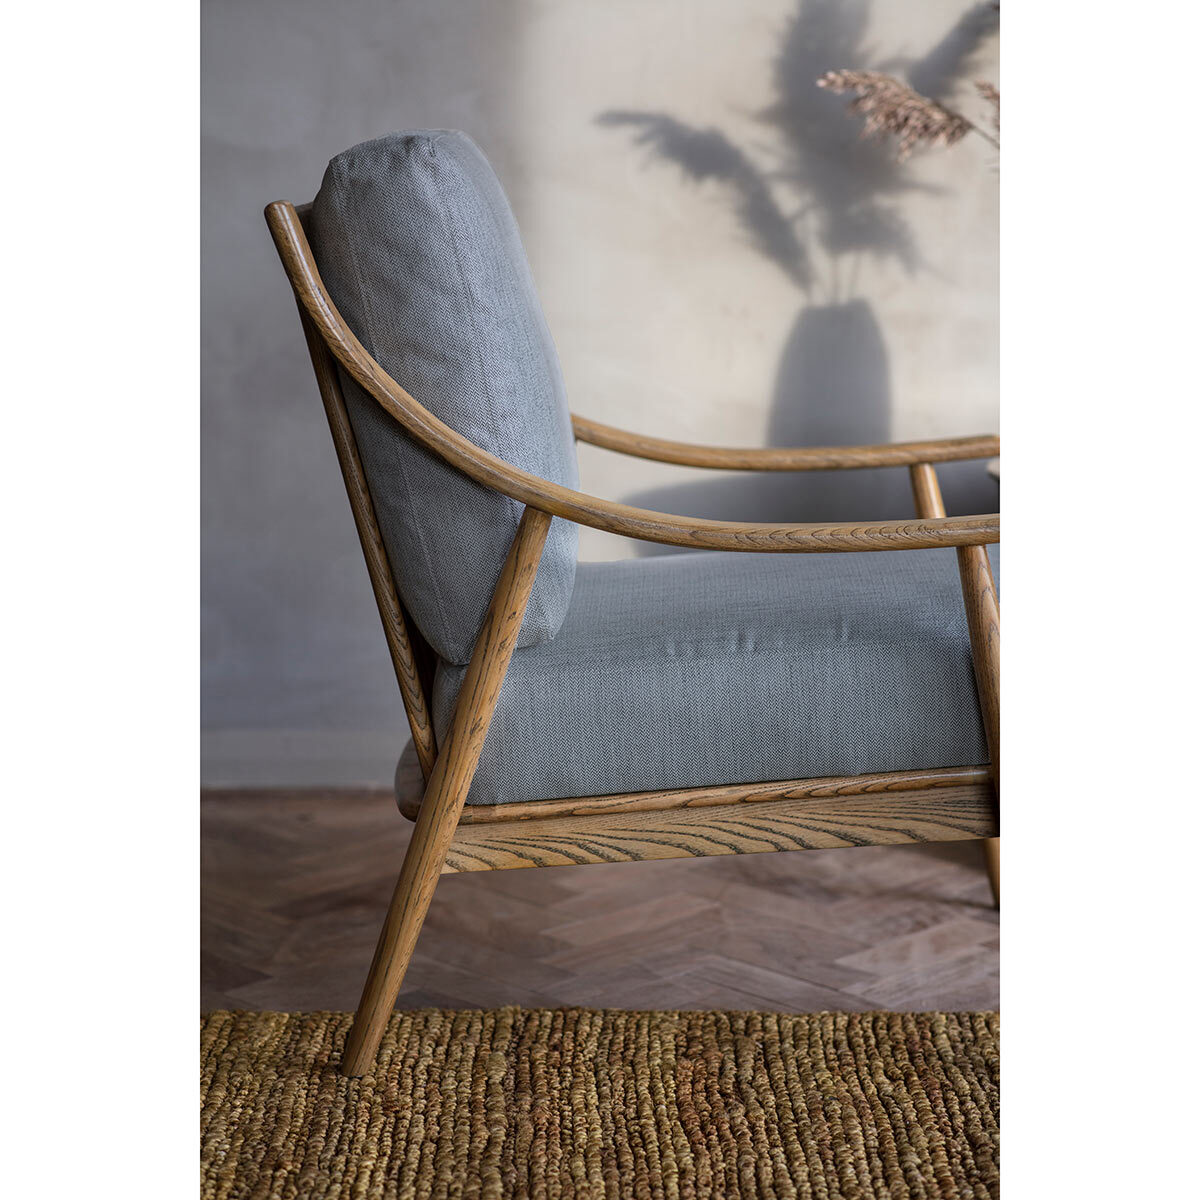 Side View of Gallery Ashwell Chair, Dark Grey